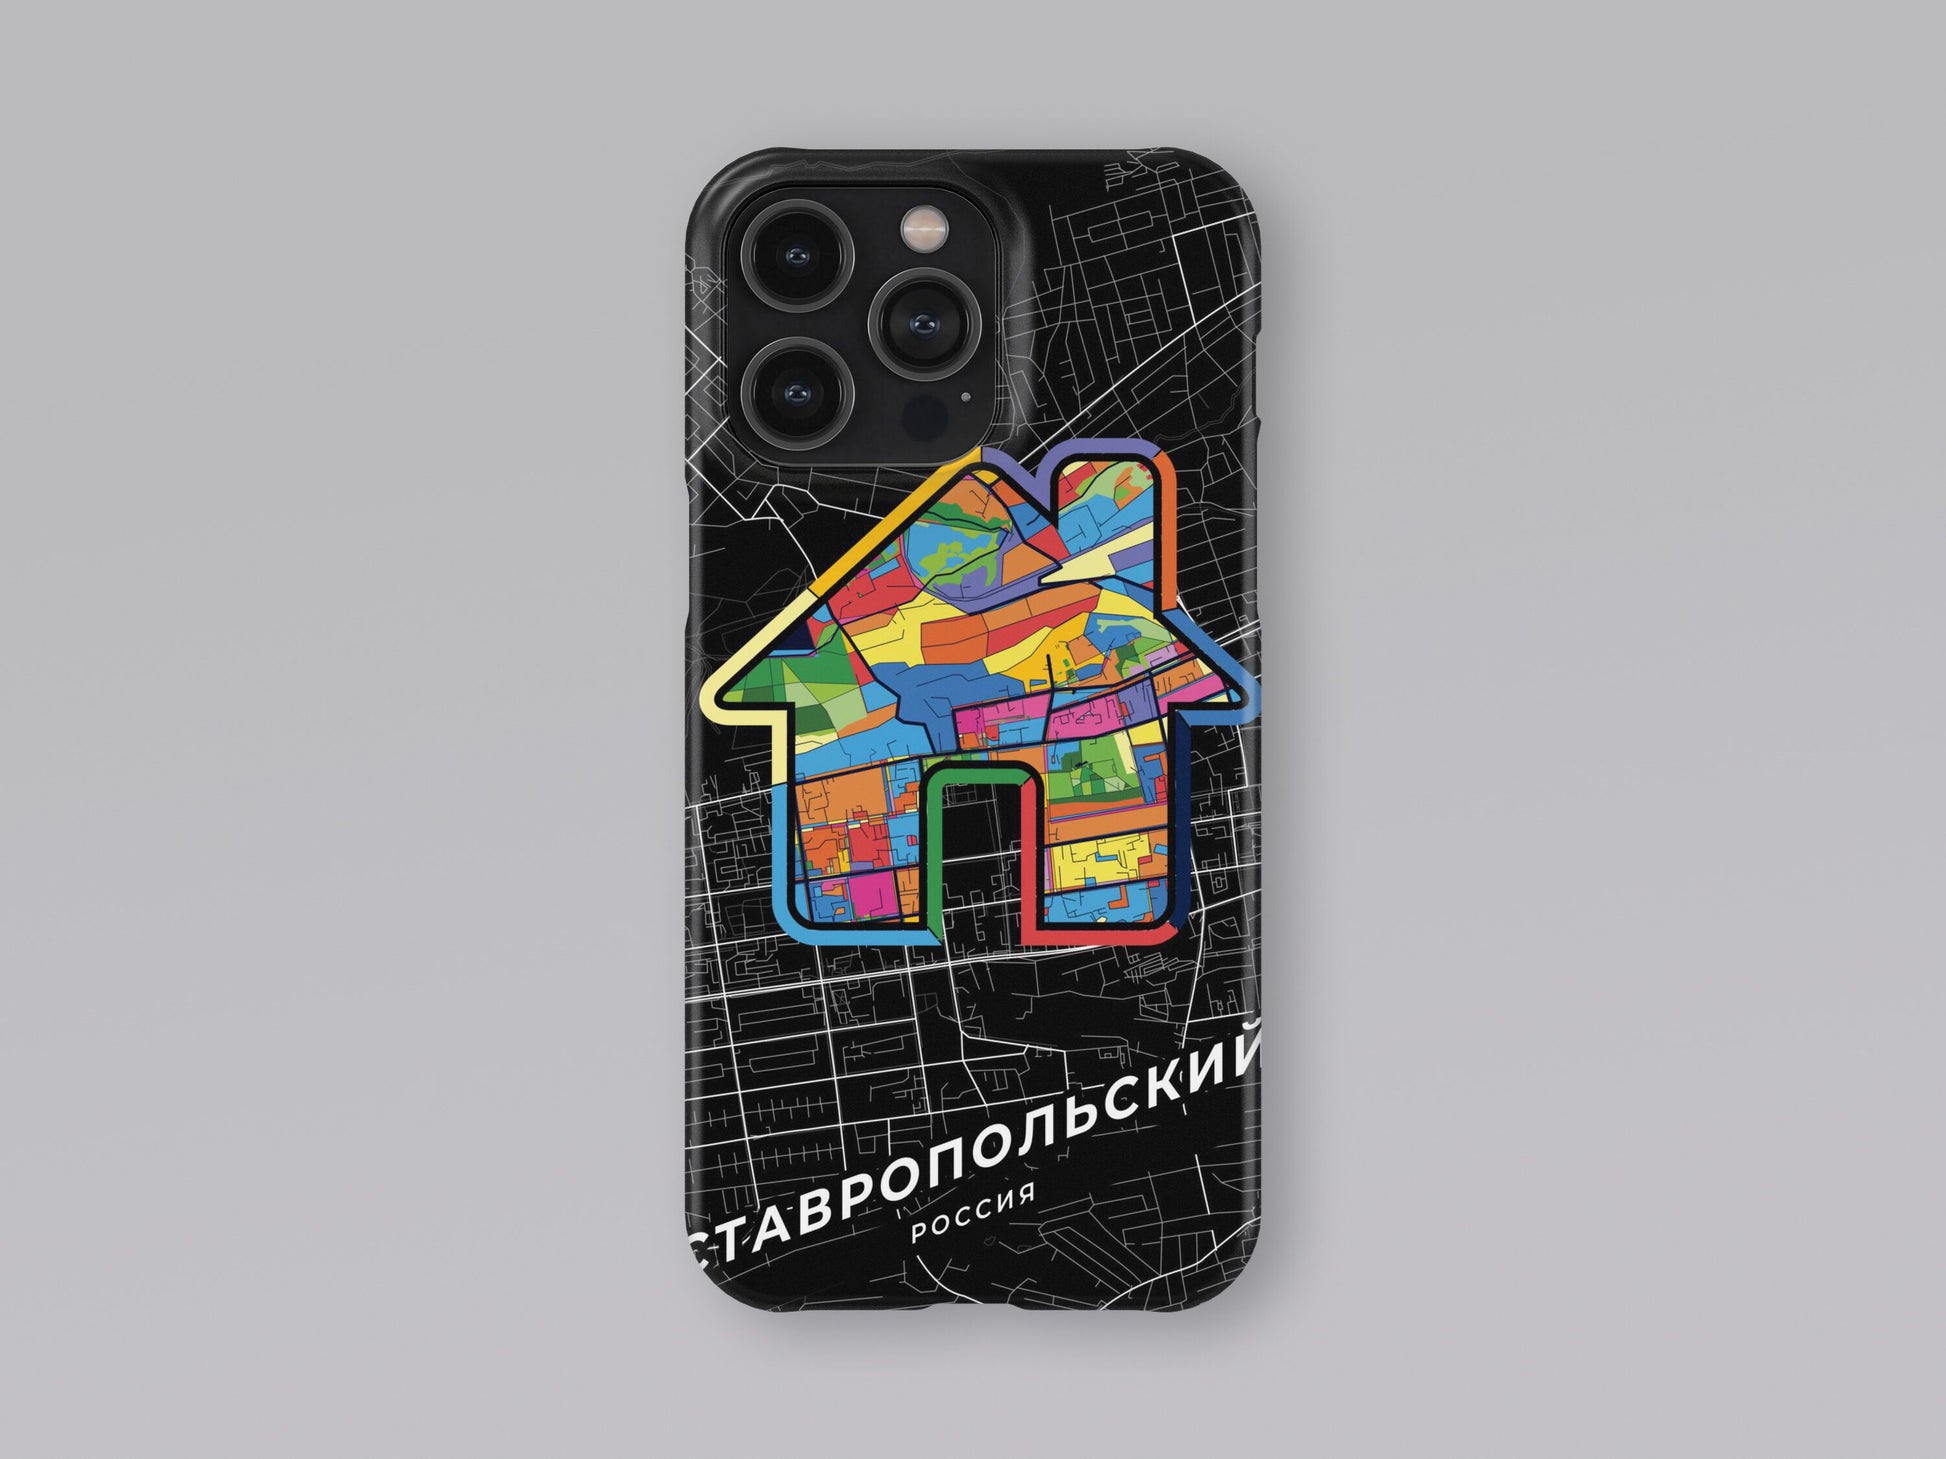 Stavropol Russia slim phone case with colorful icon 3